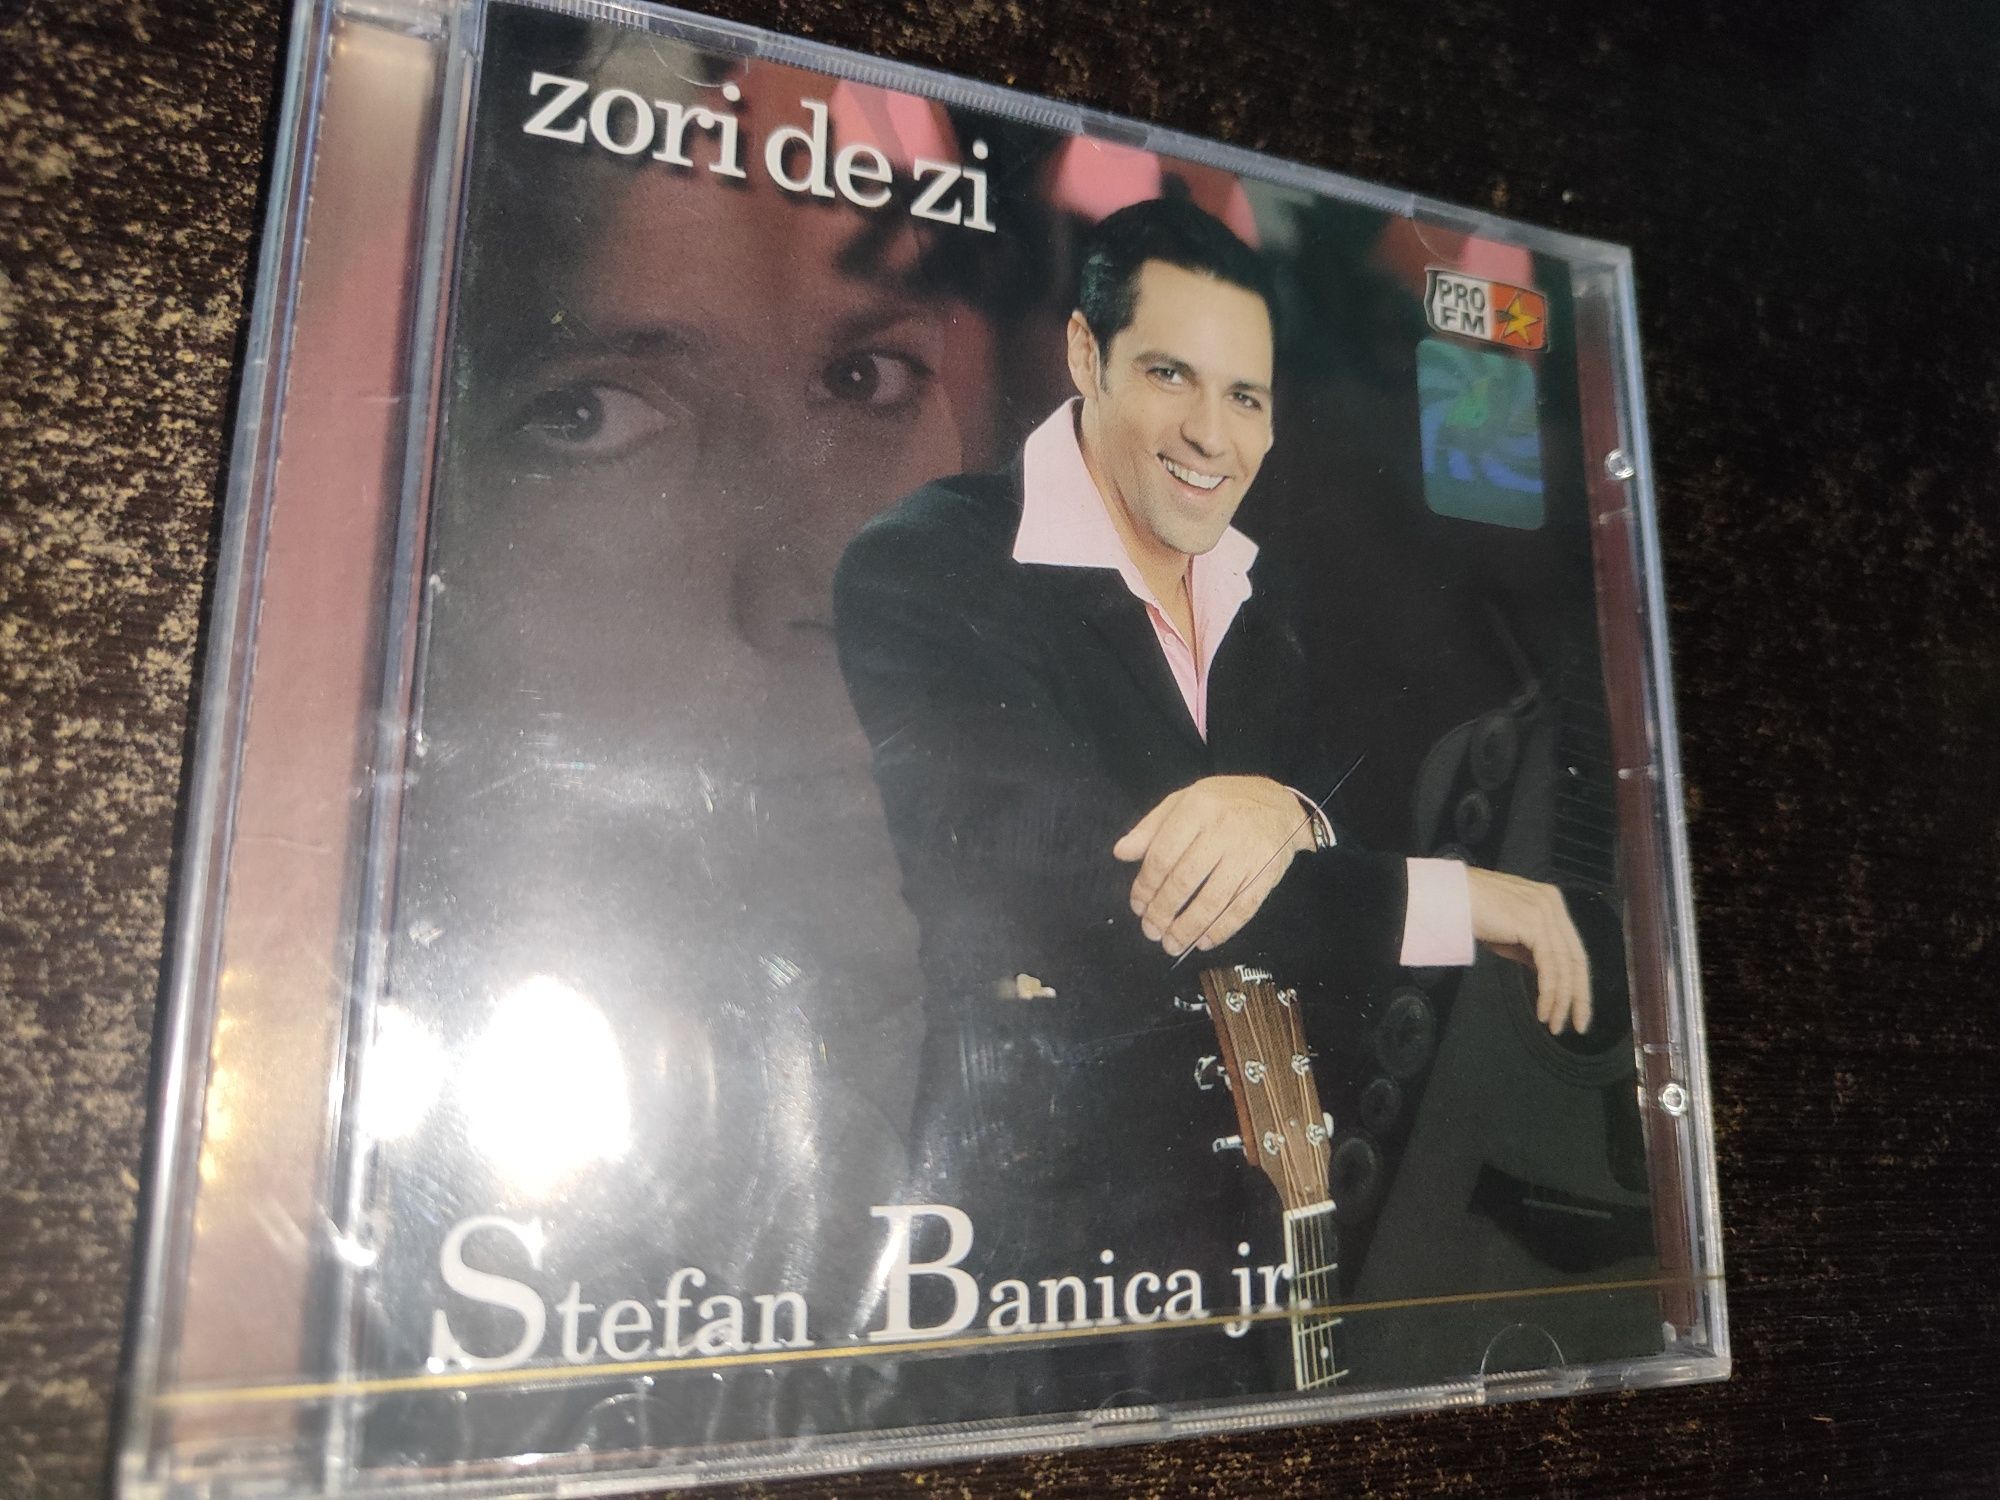 CD Stefan Banica jr. Zori de Zi